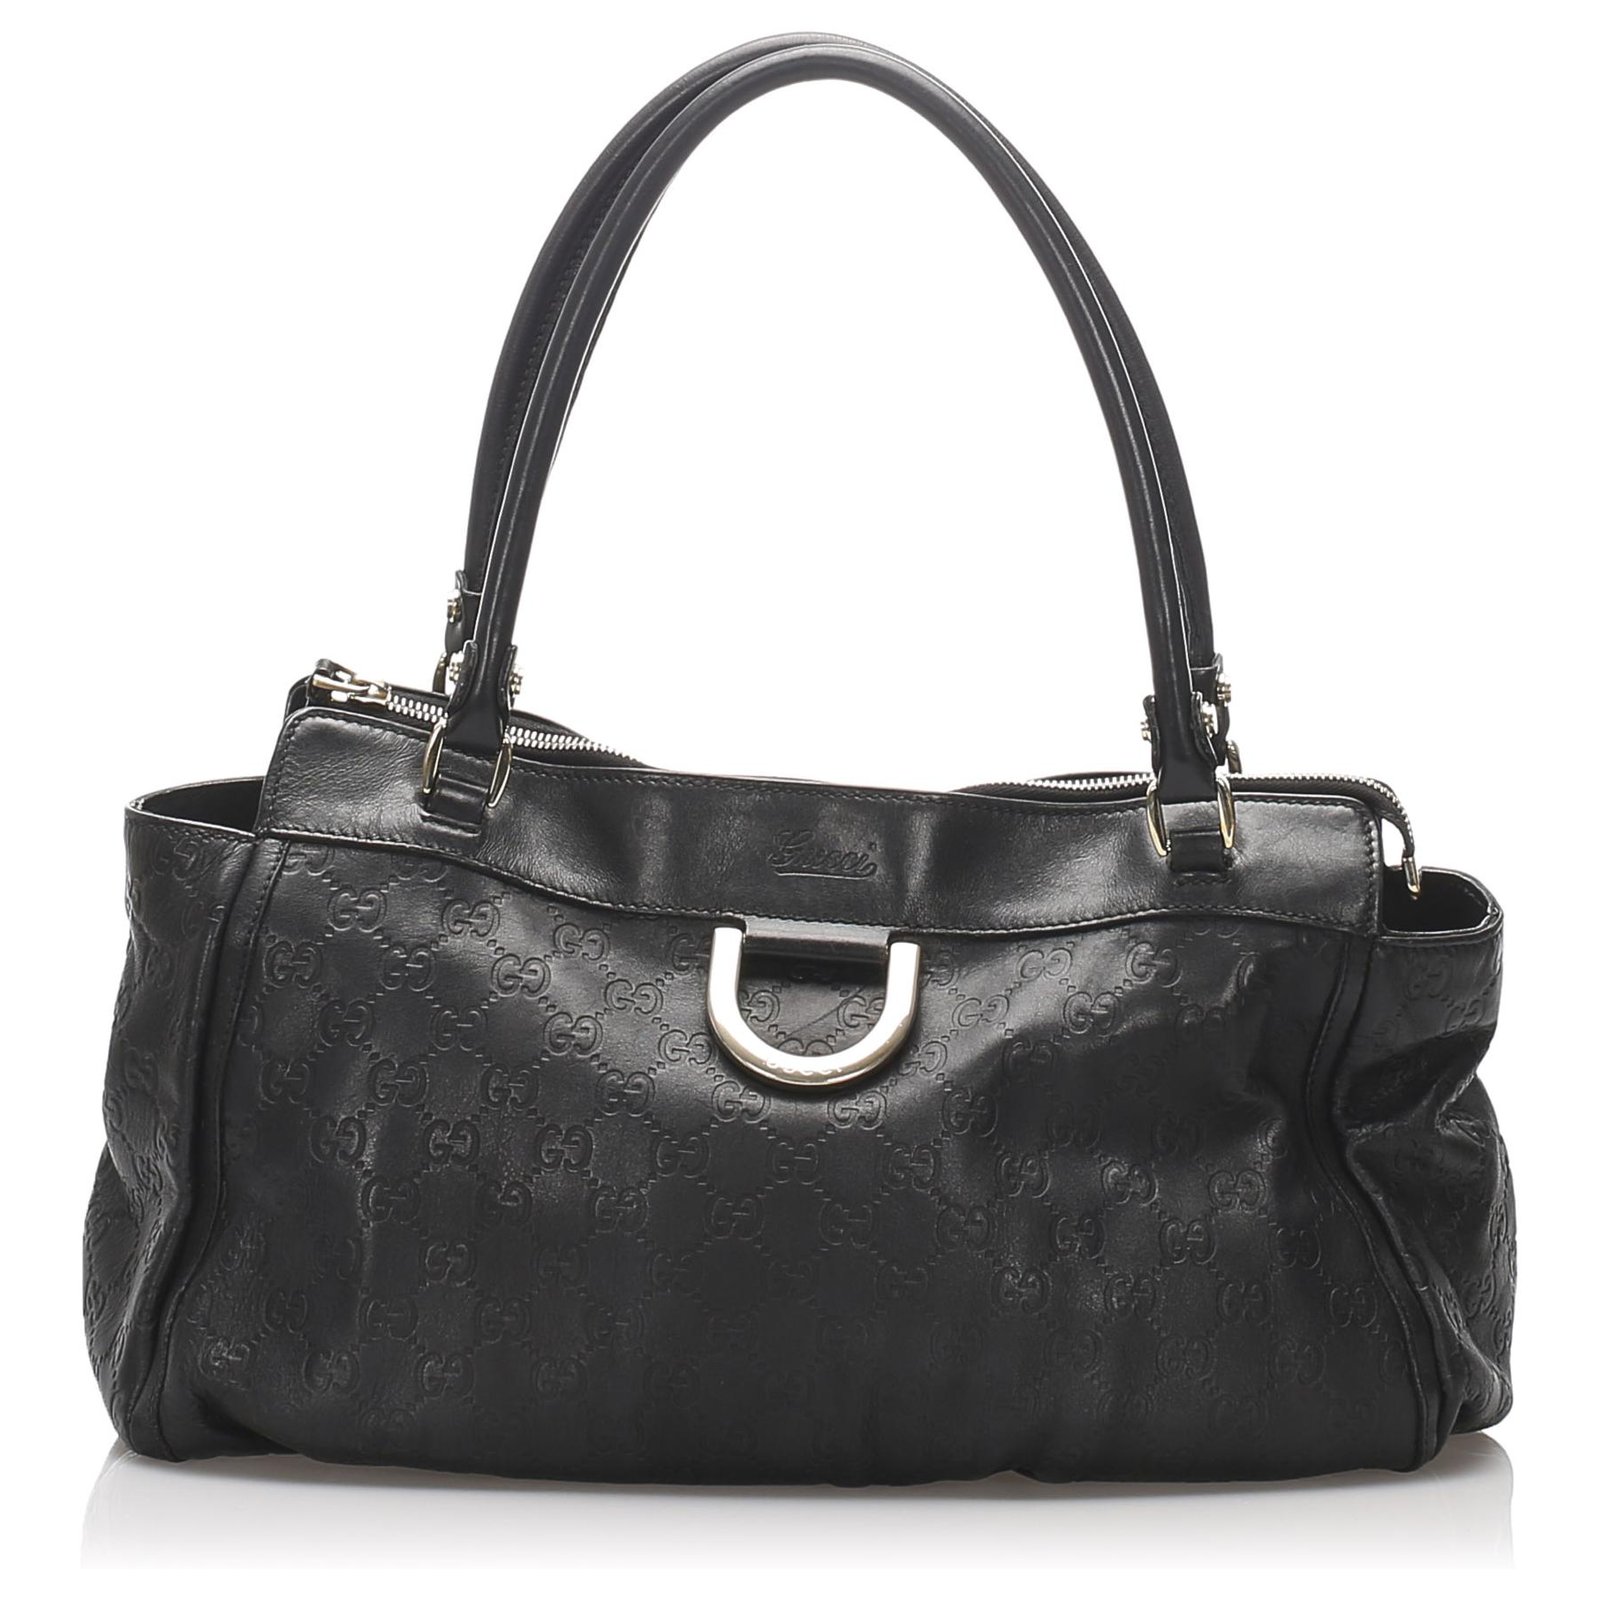 guccissima black leather handbag